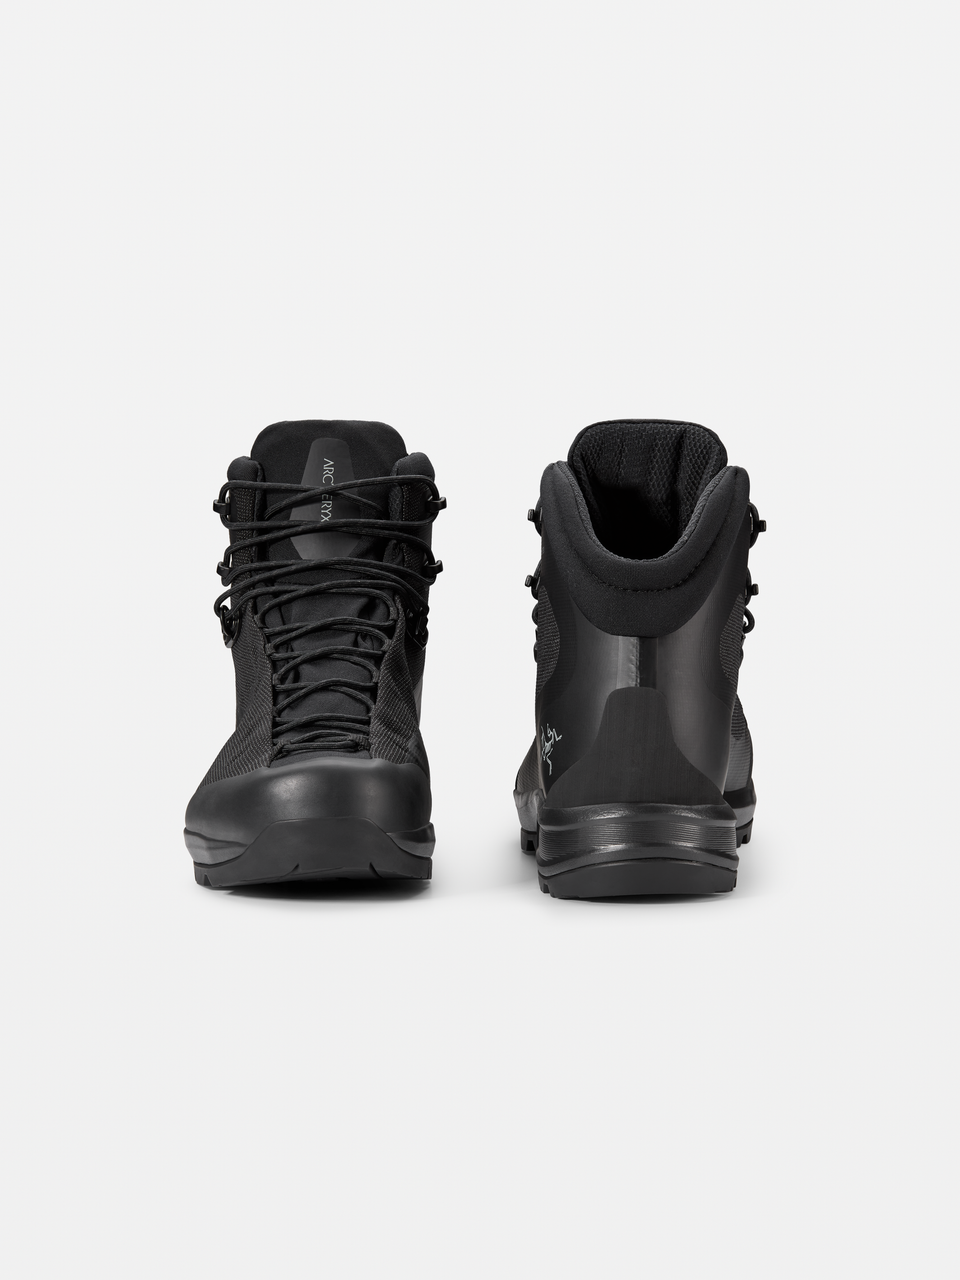 Acrux TR Gore-Tex Hiking Boots Black/Black